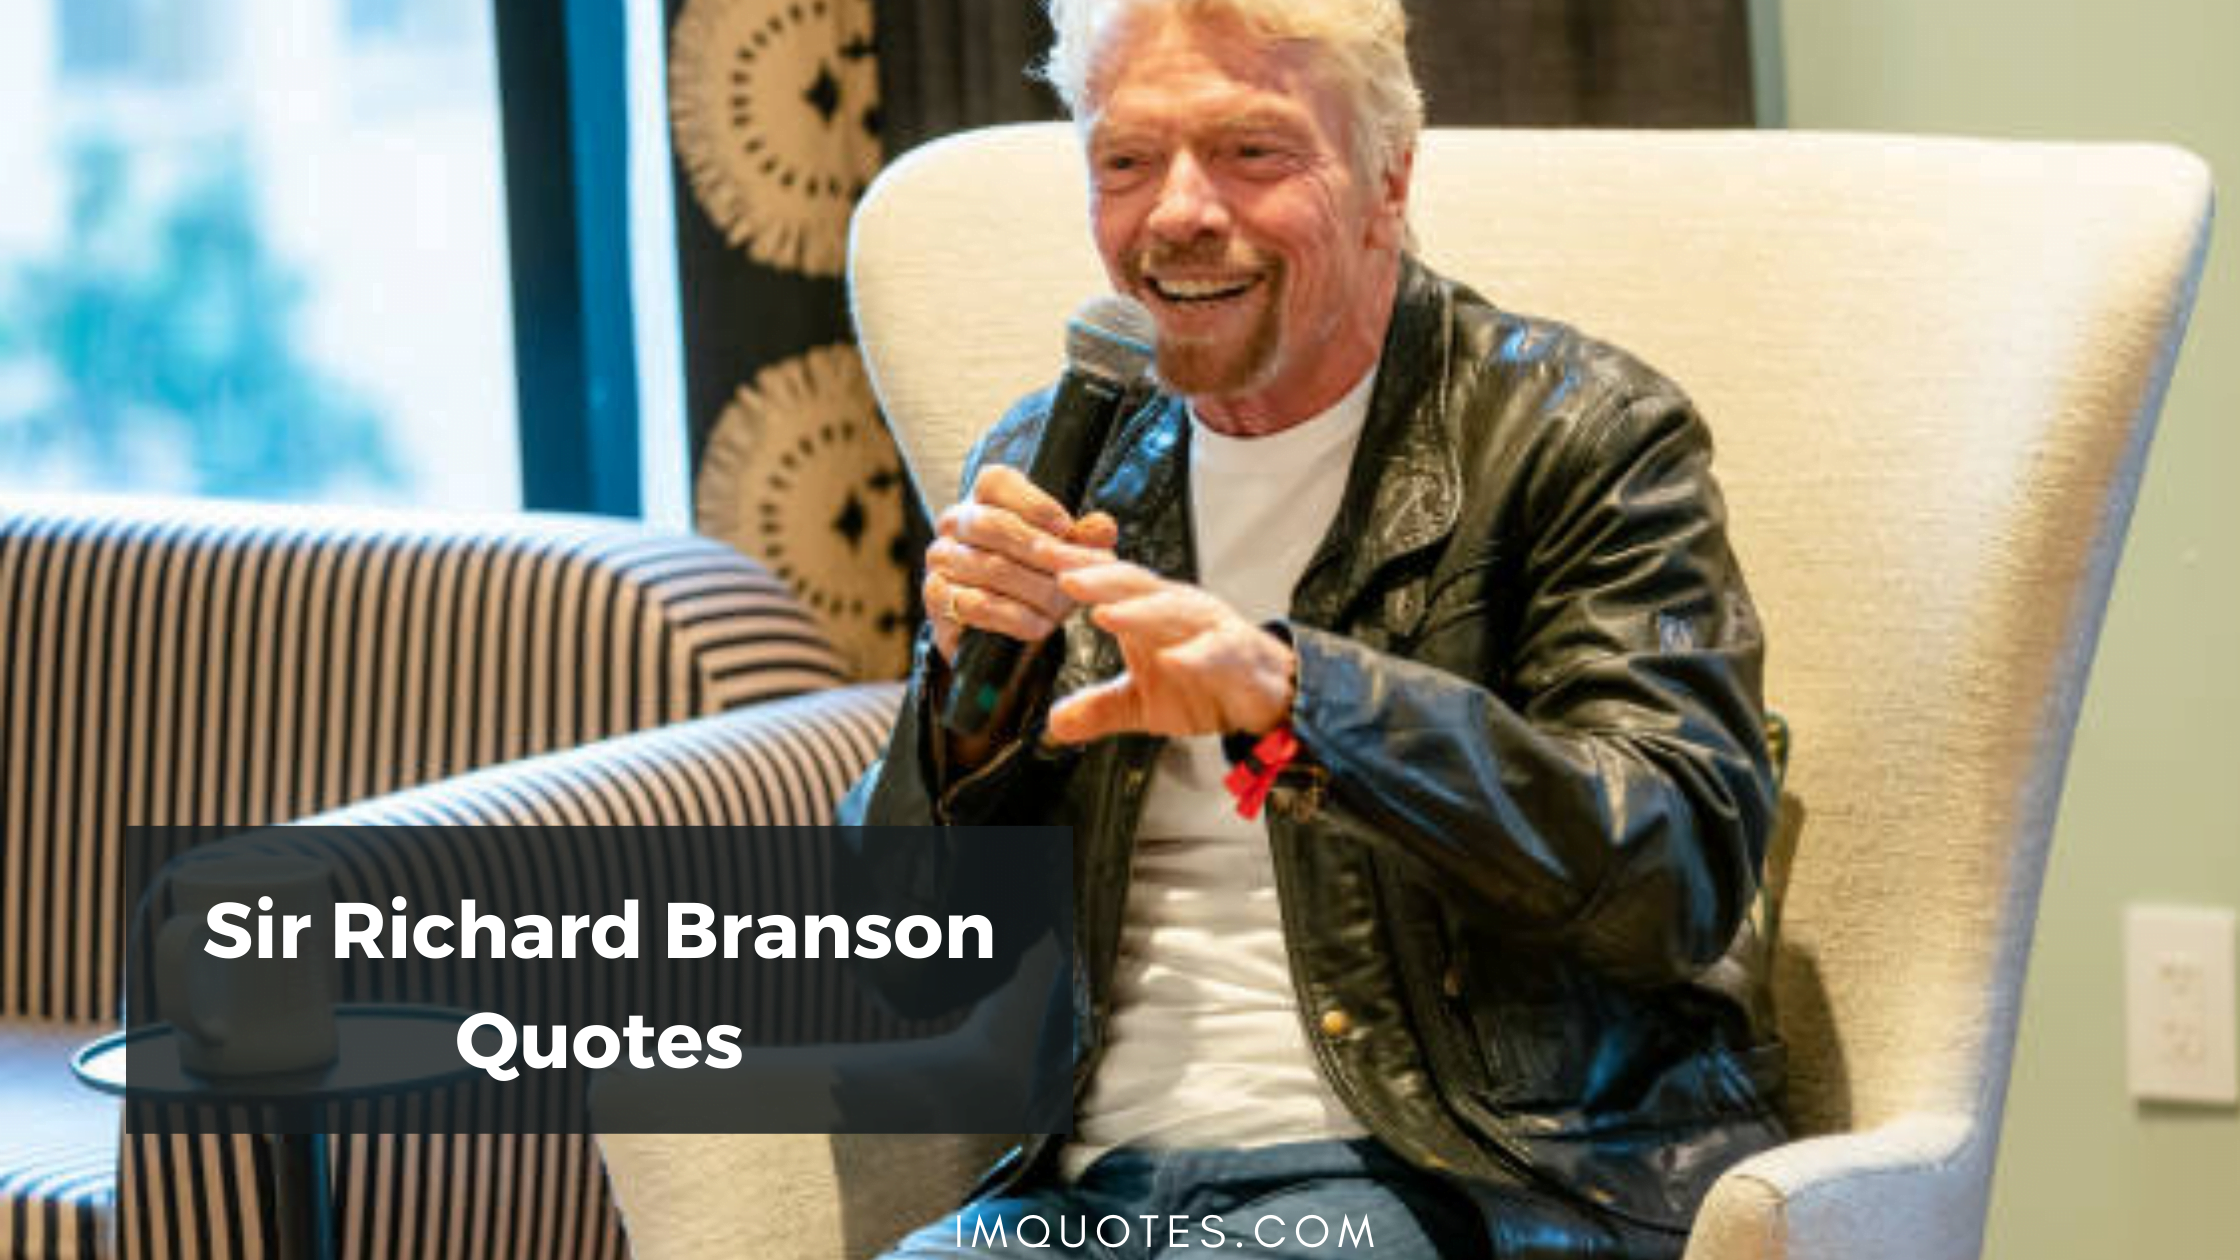 Sir Richard Branson Quotes1